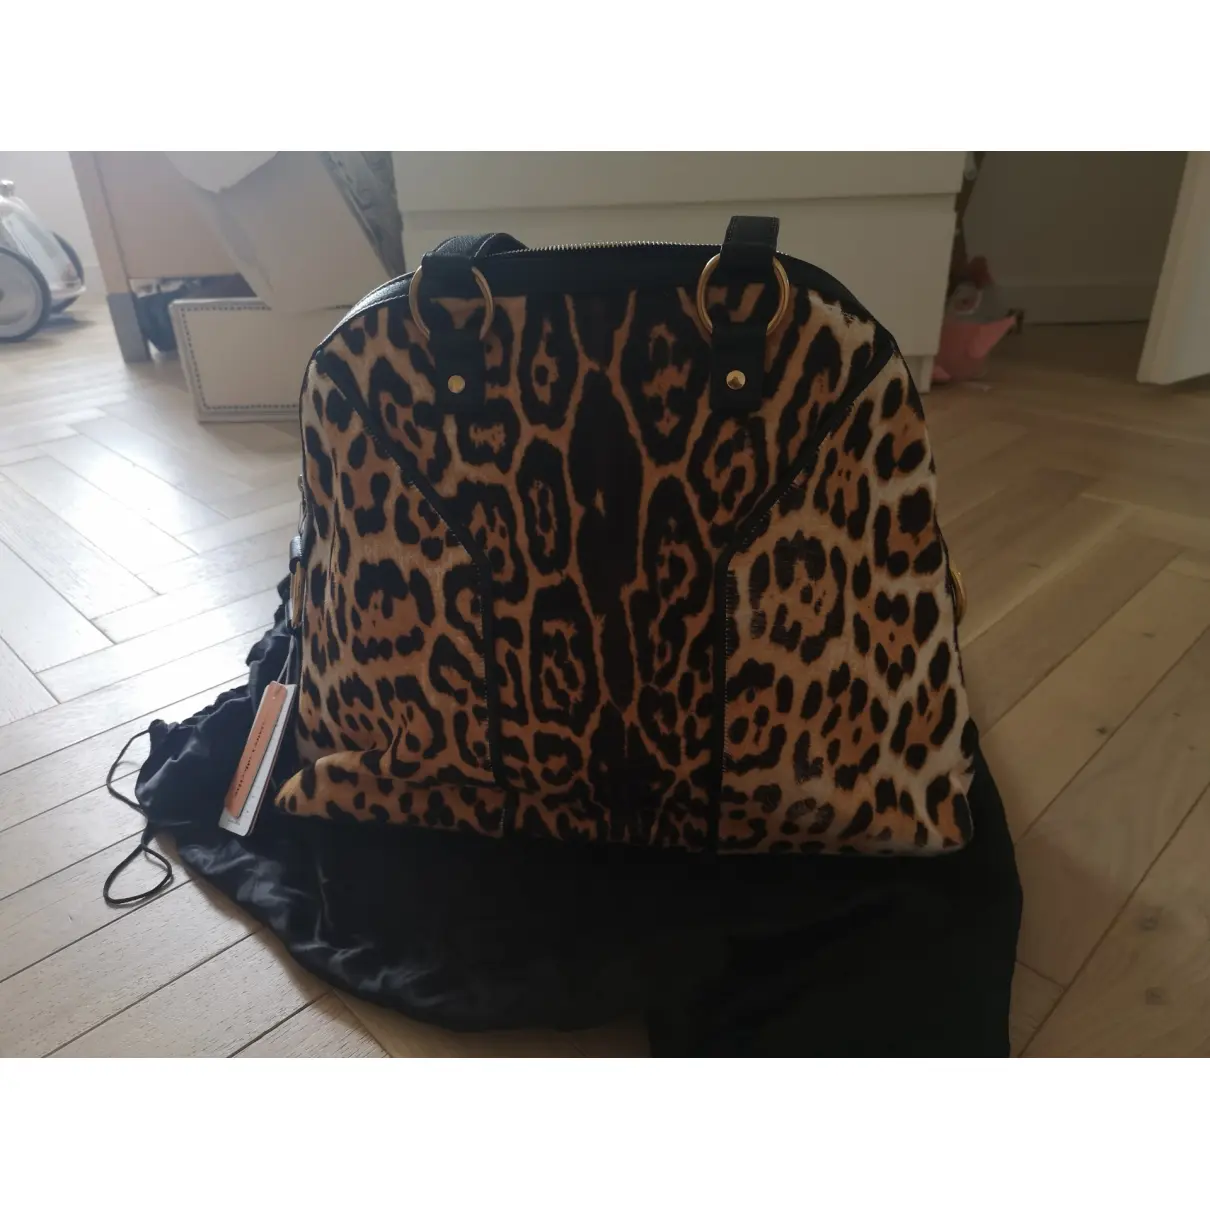 Buy Yves Saint Laurent Muse pony-style calfskin handbag online